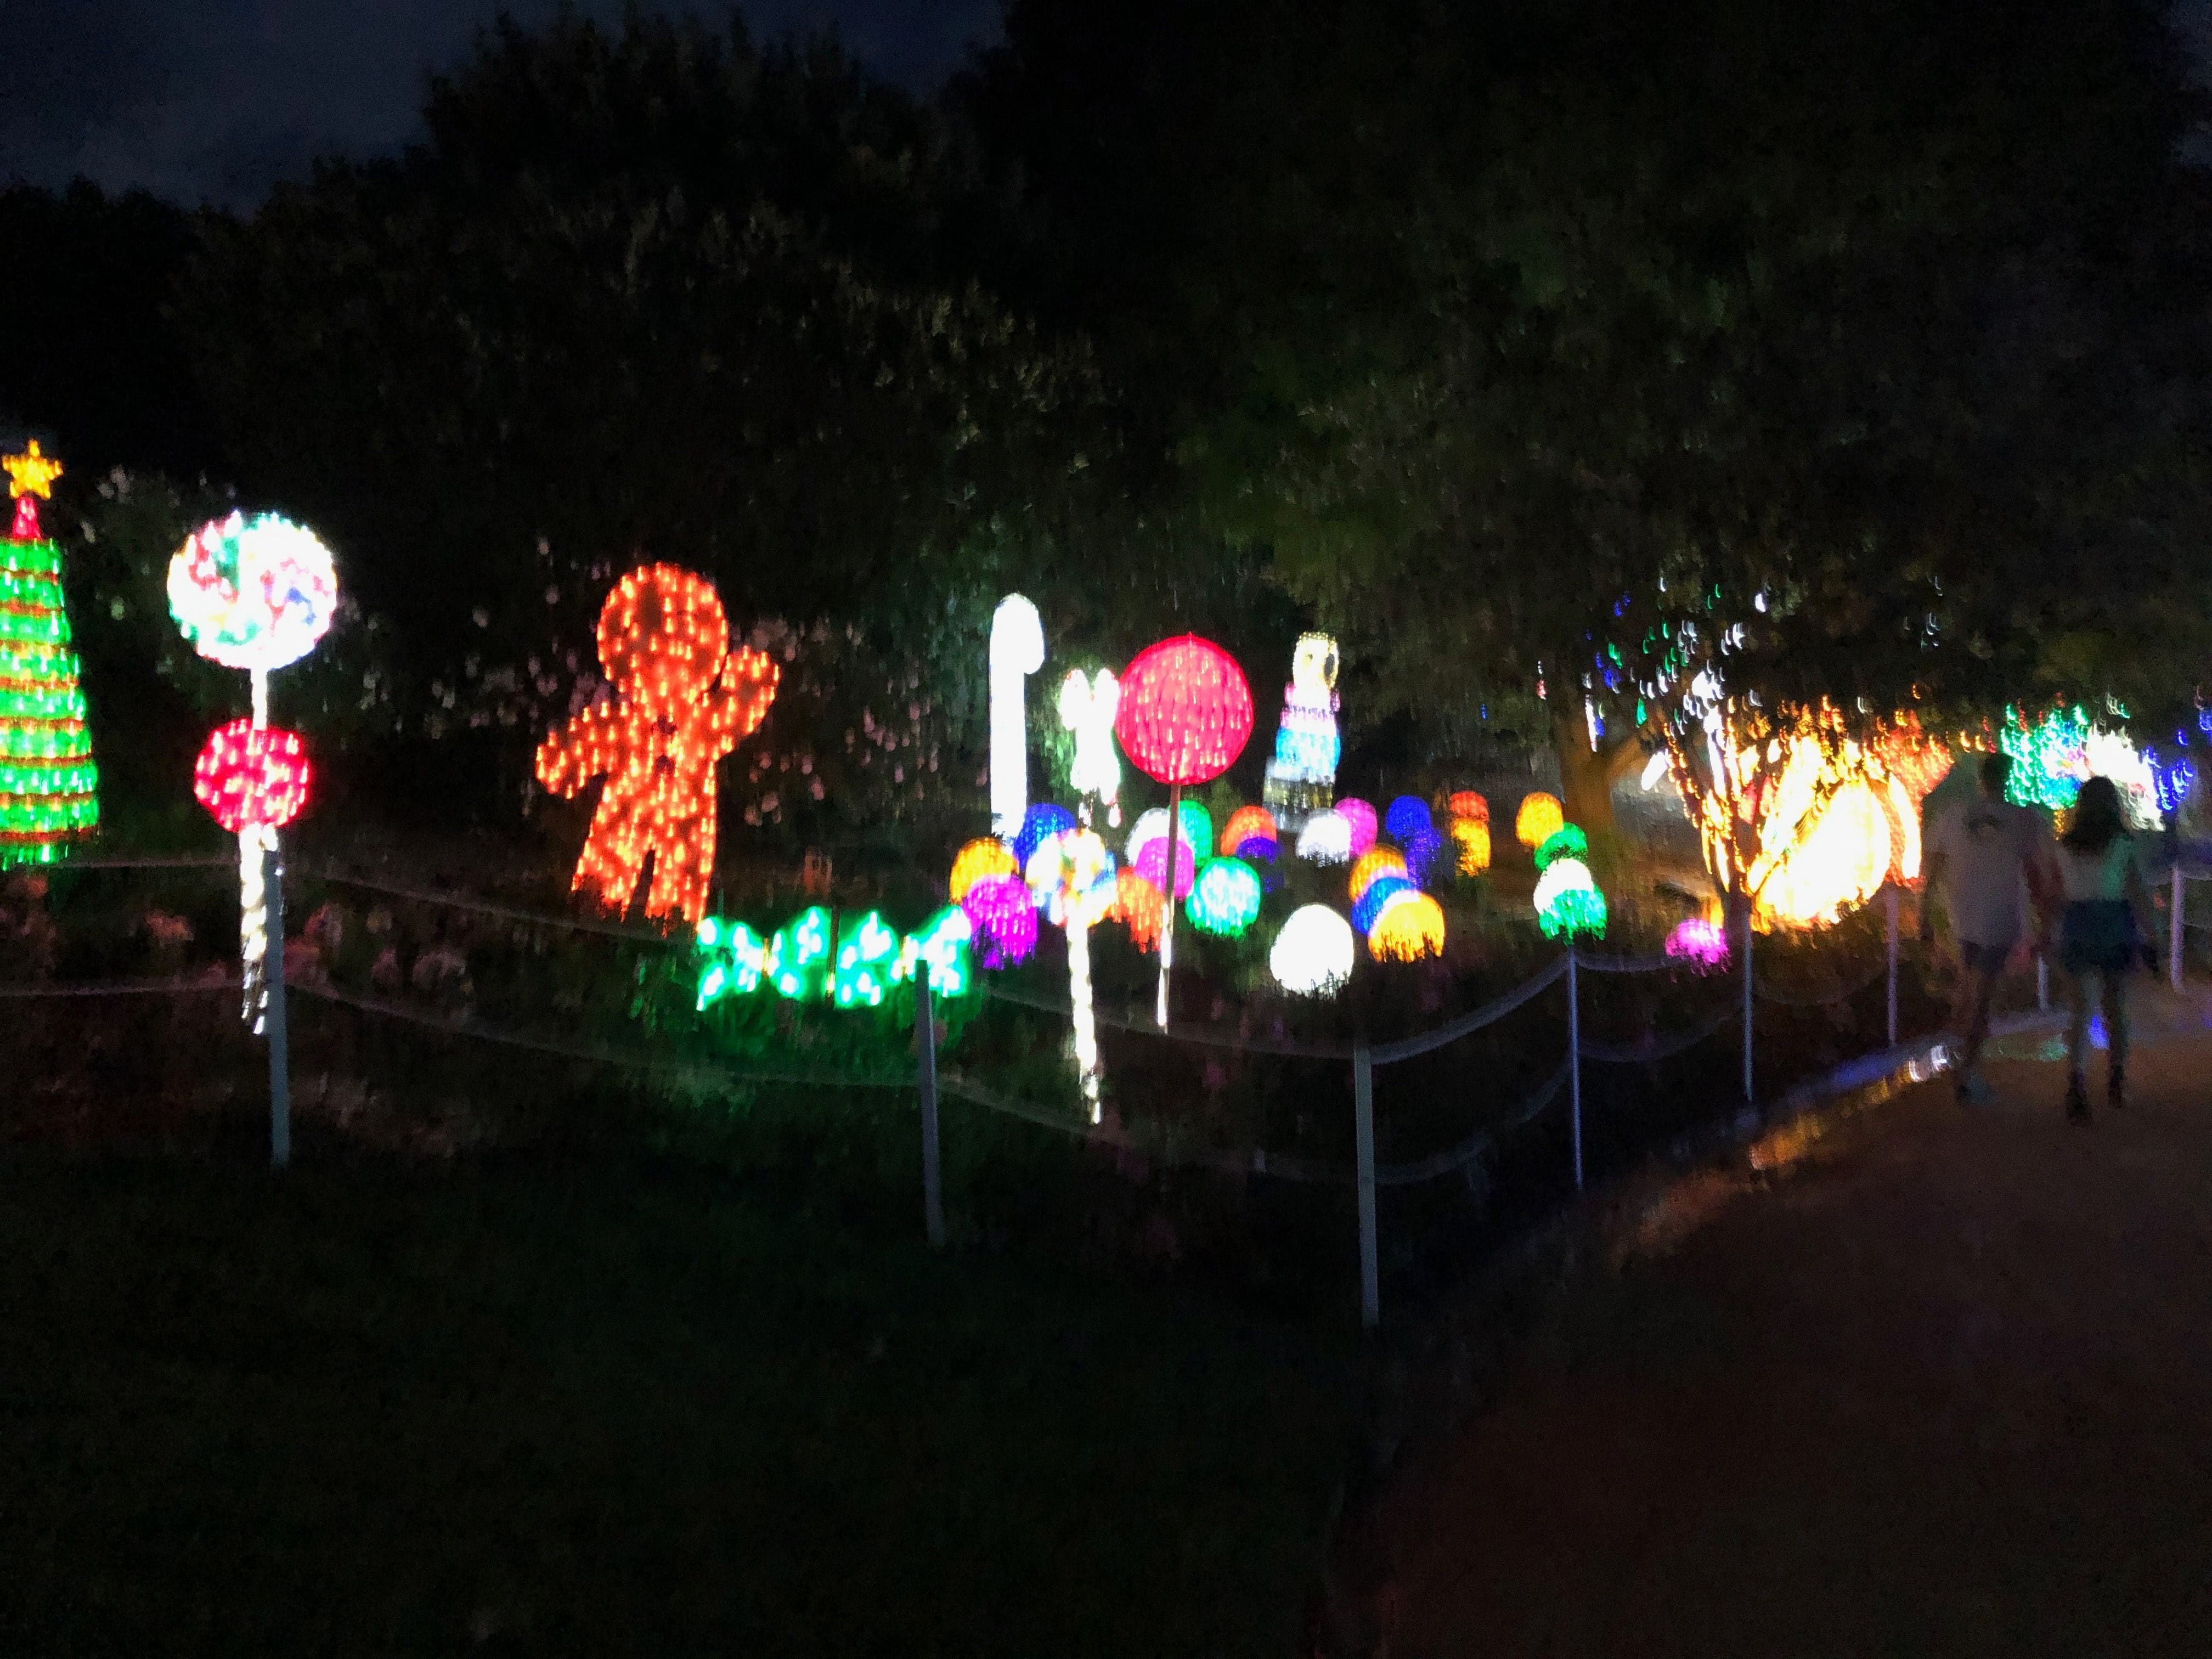 Hunter Valley Gardens Christmas Lights 2018-2019 Public Day Night Tour Image -5c149f4525525